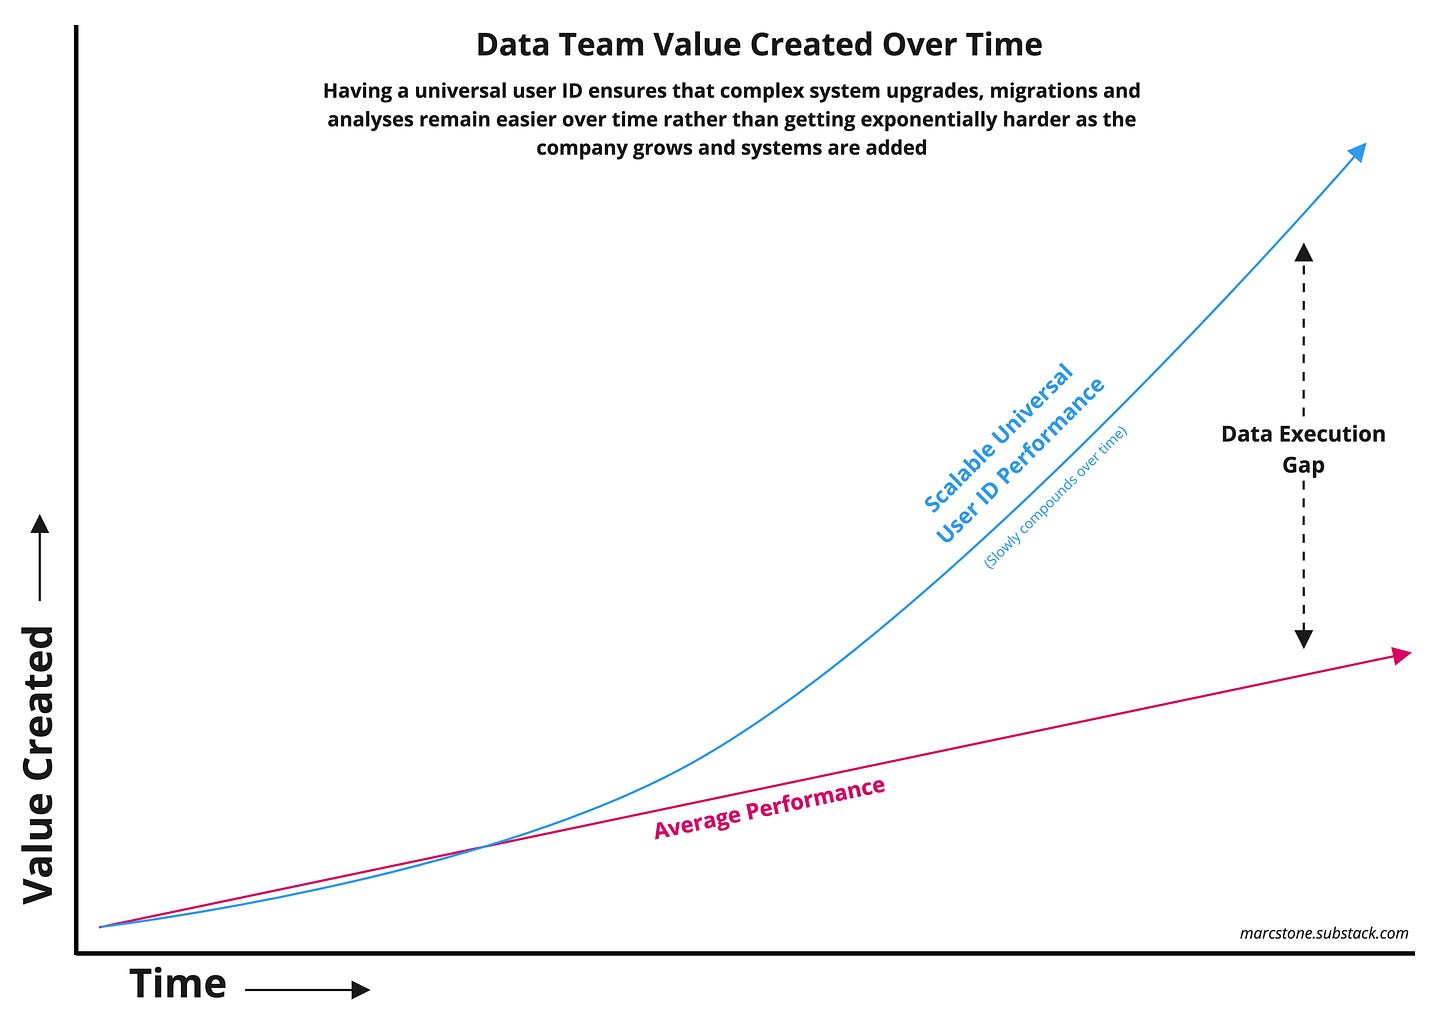 Data team execution gap